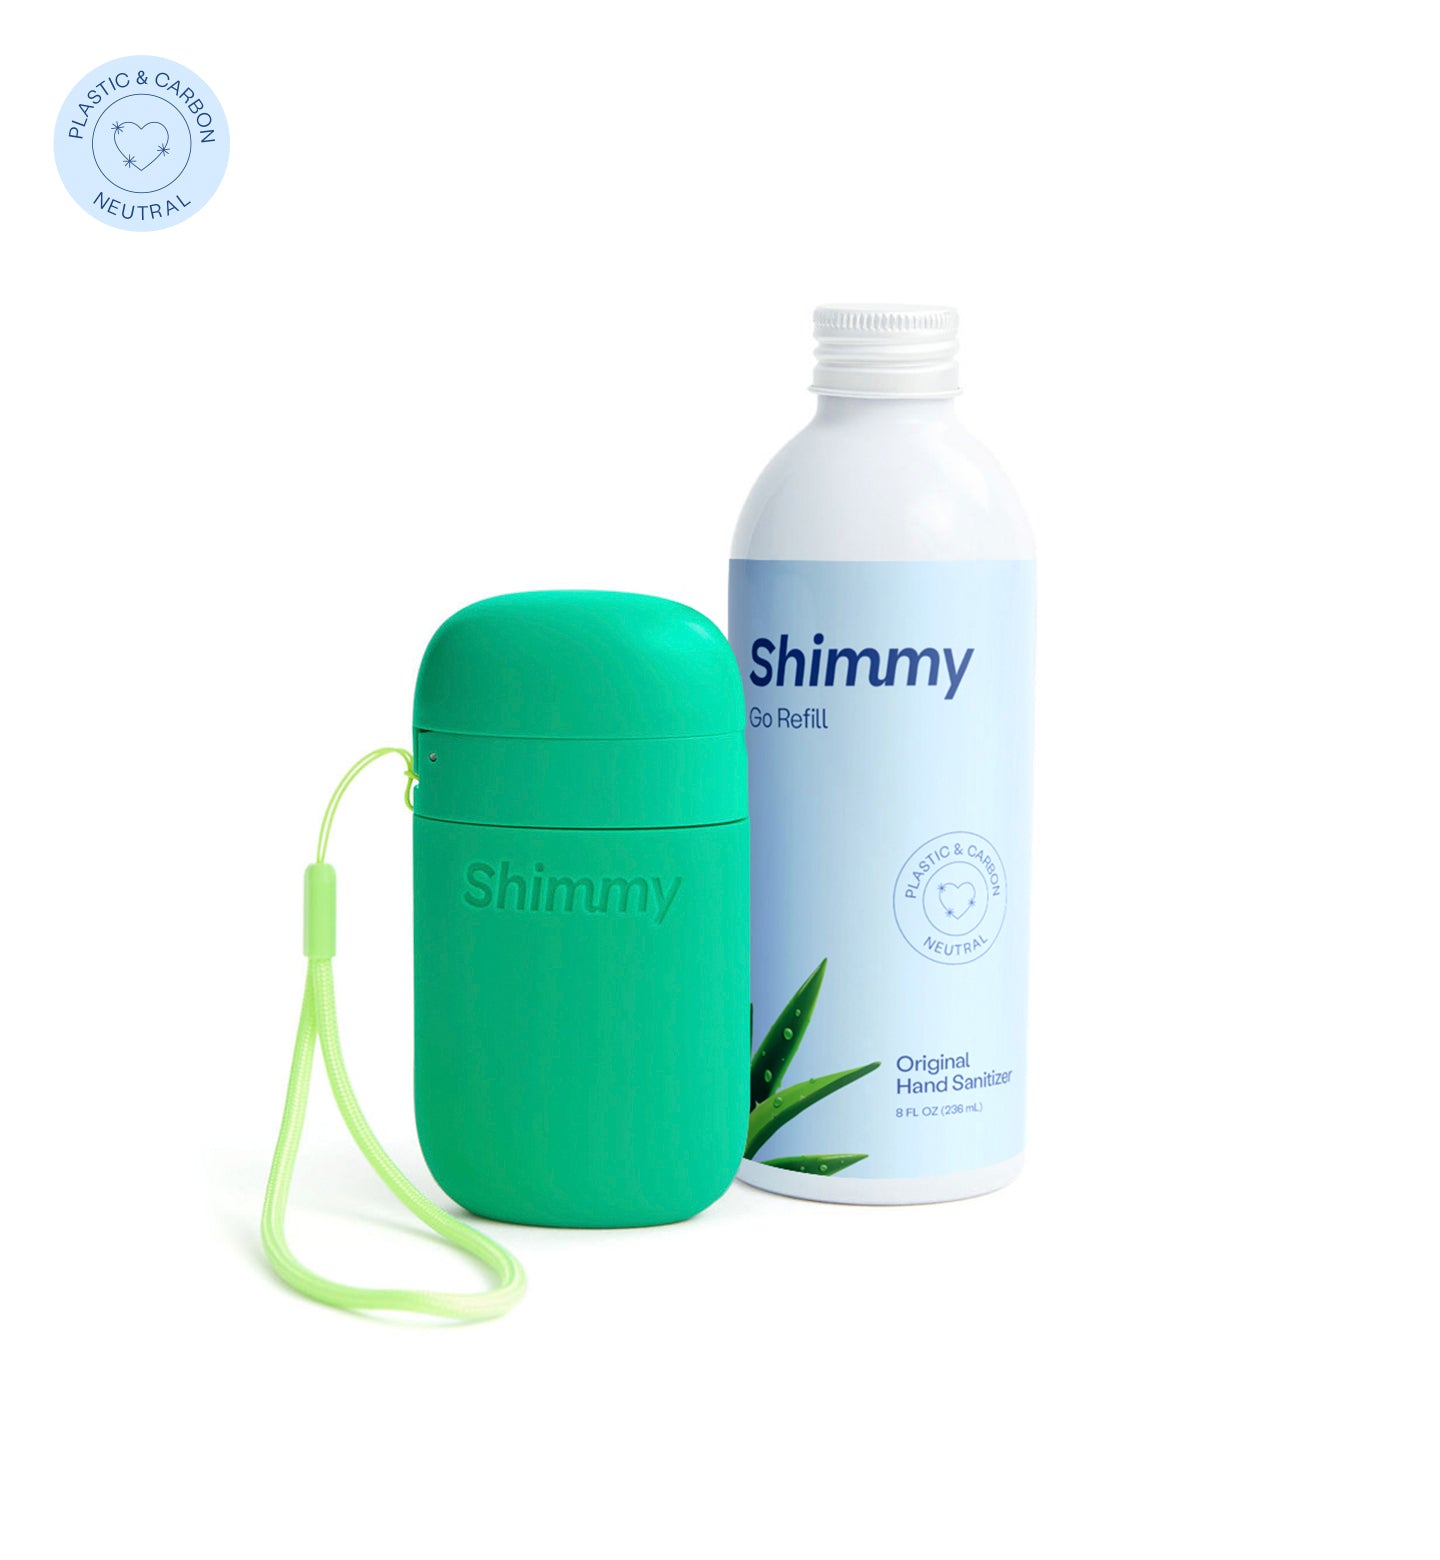 Shimmy Go Portable Hand Sanitizer Dispenser Kelly Green + Original Hand Sanitizer [40734803853503] - 40734803853503